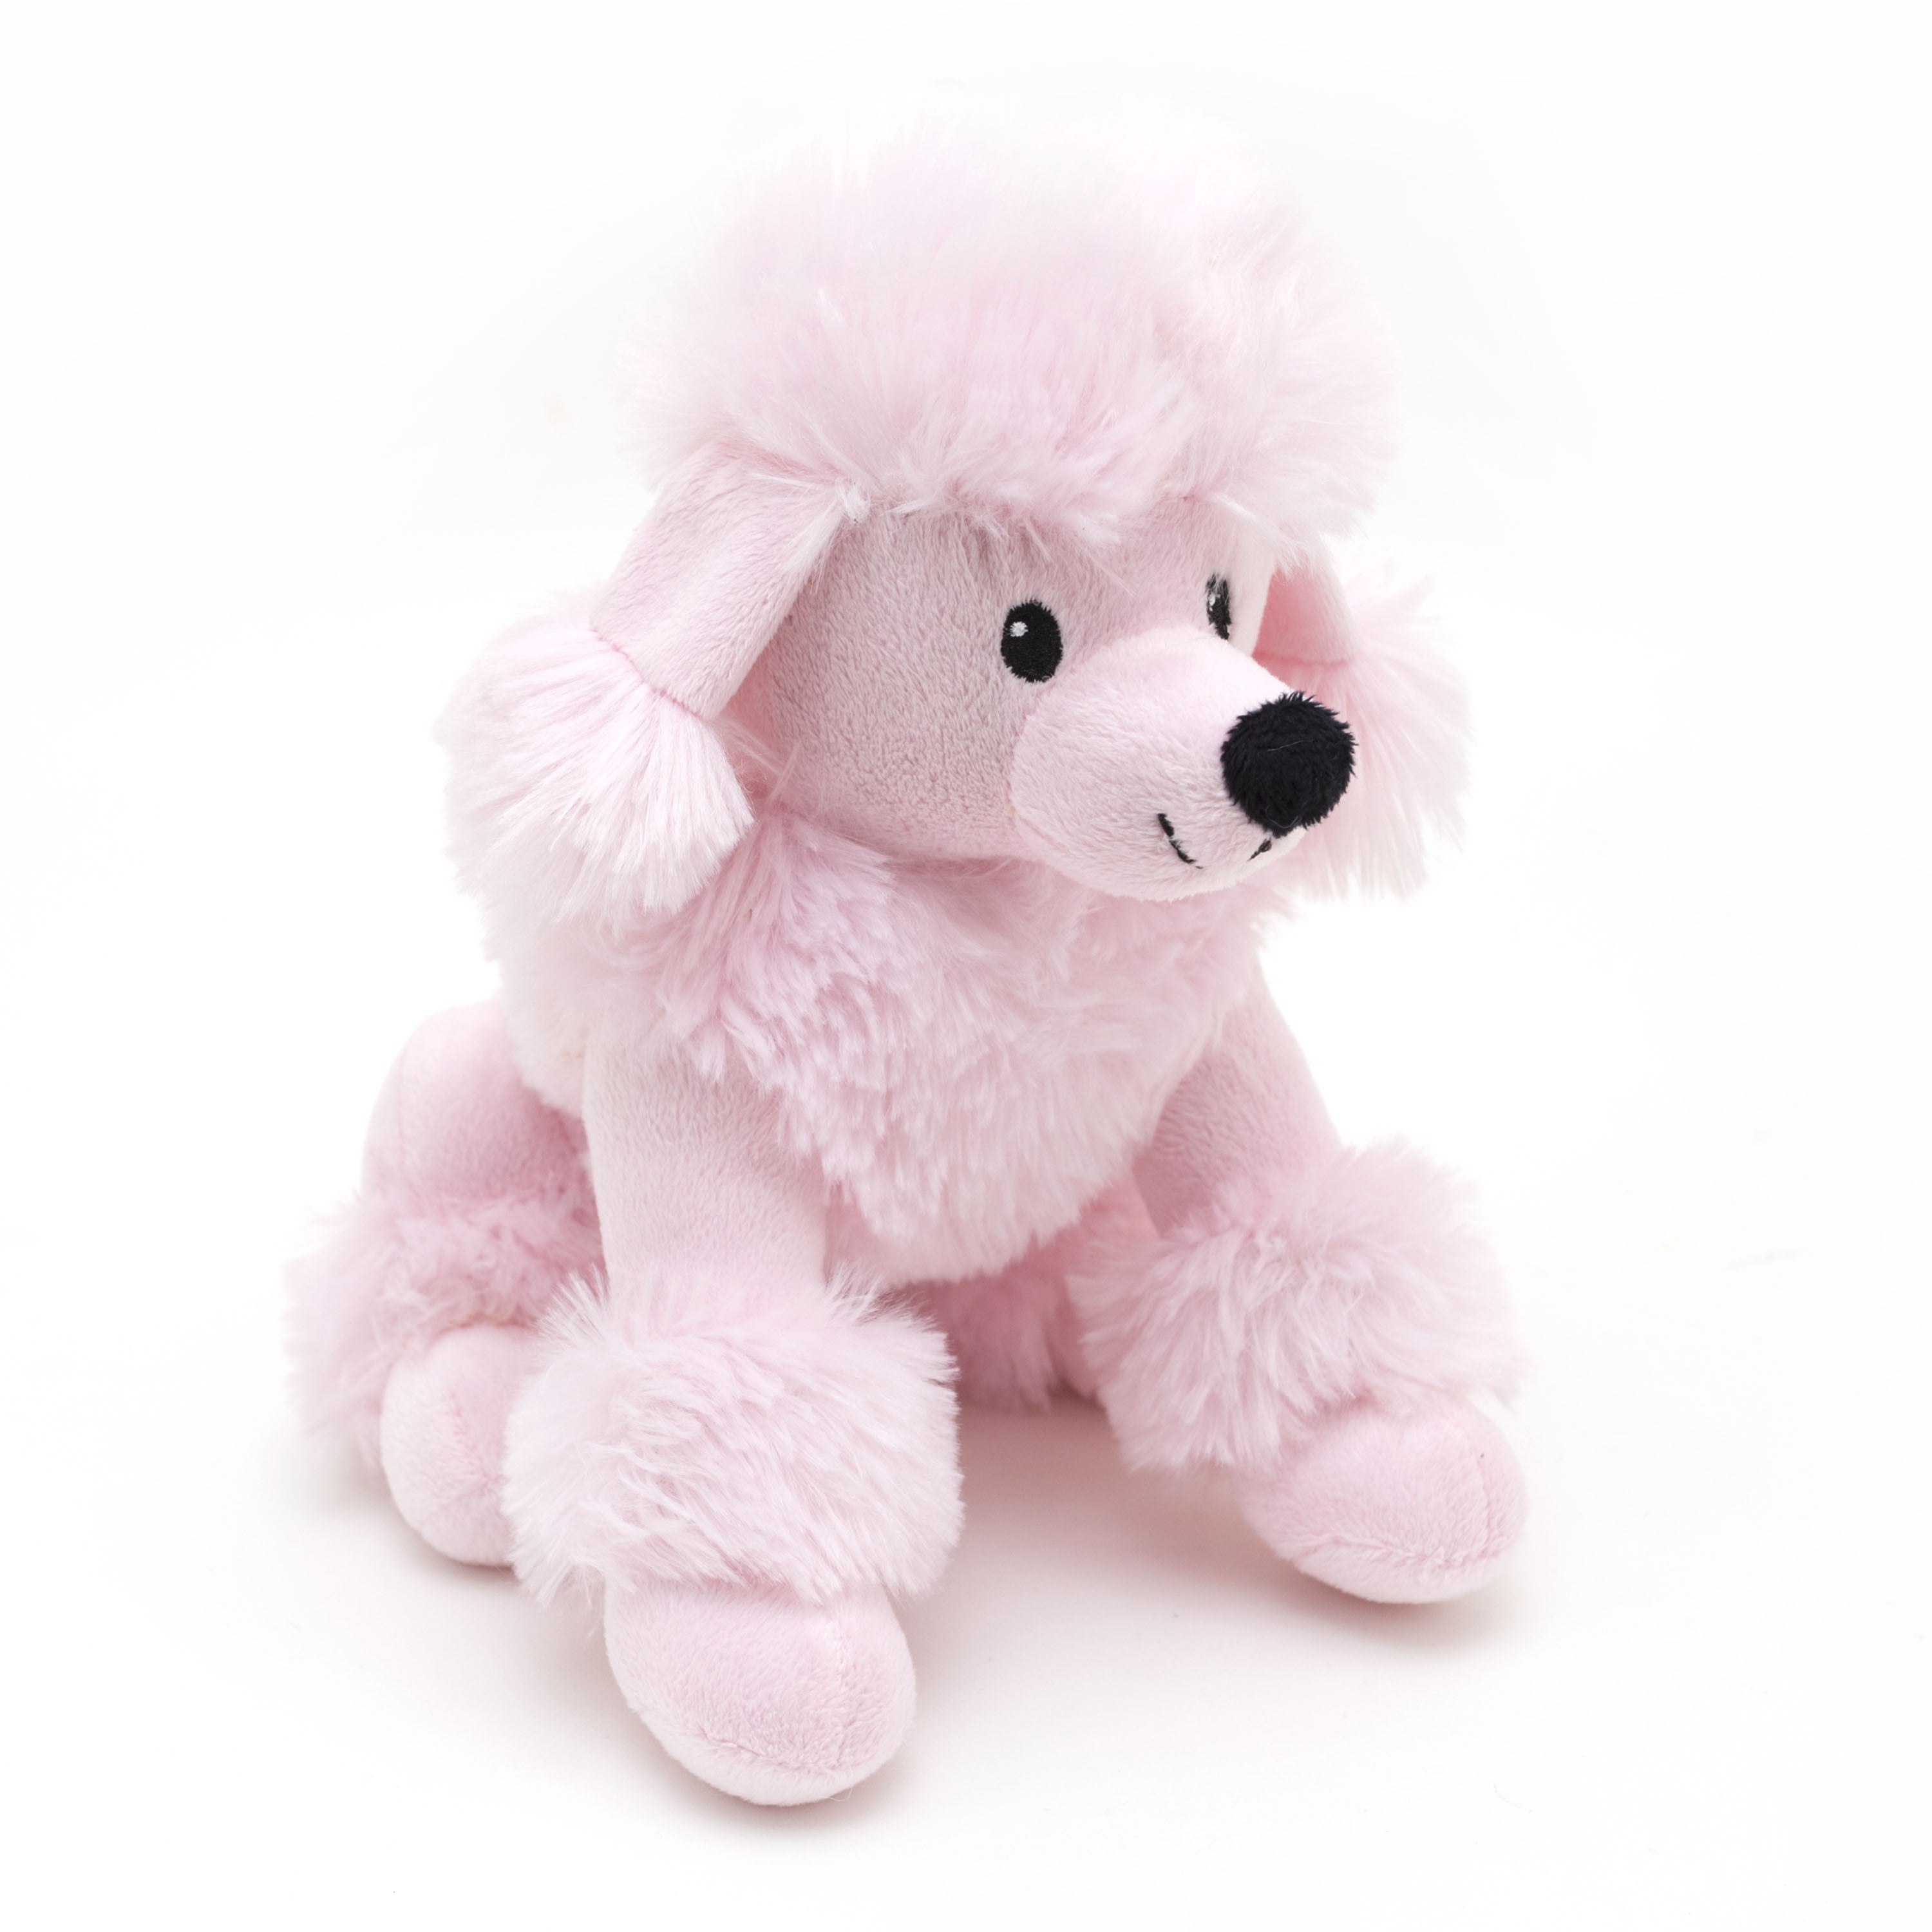 pink stuffed dog toy